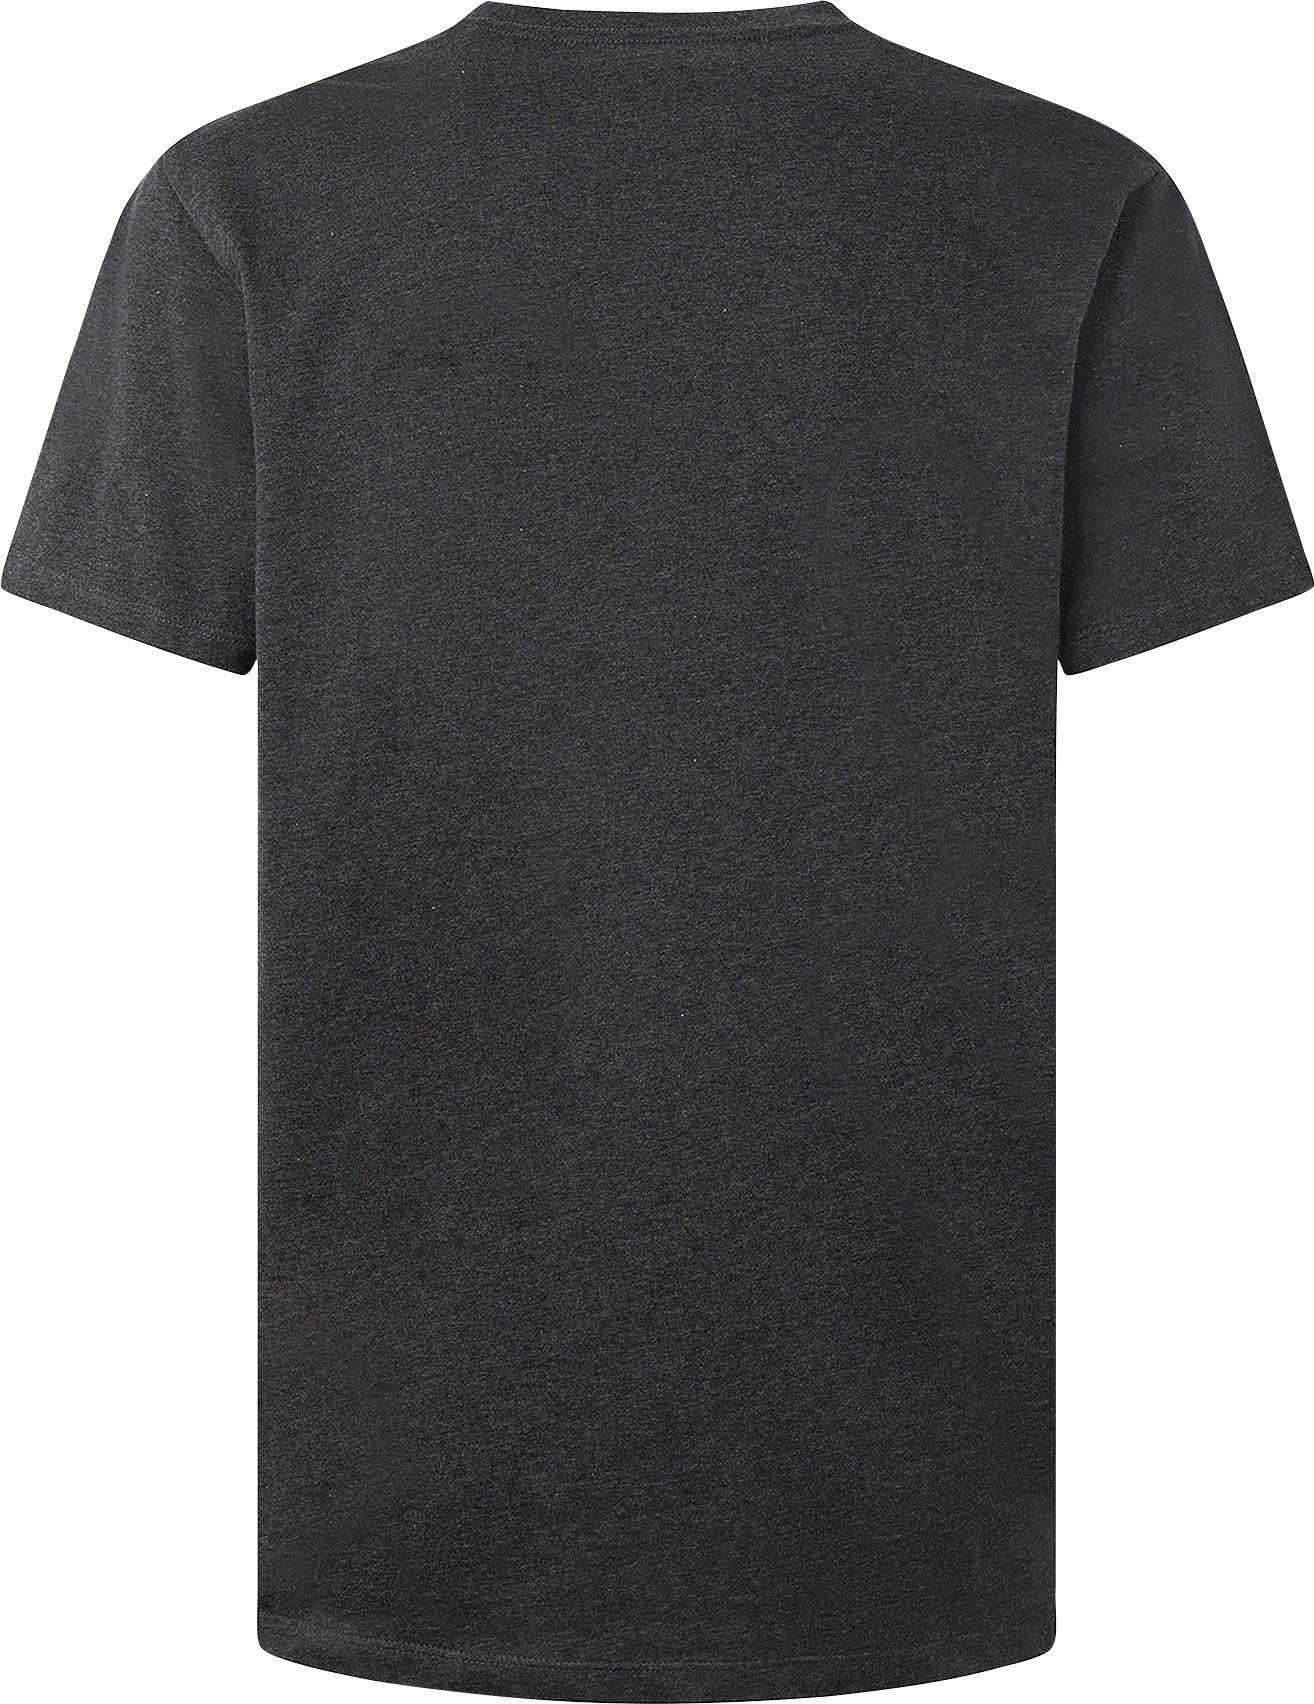 EGGO Print-Shirt dark Pepe Jeans grey marl